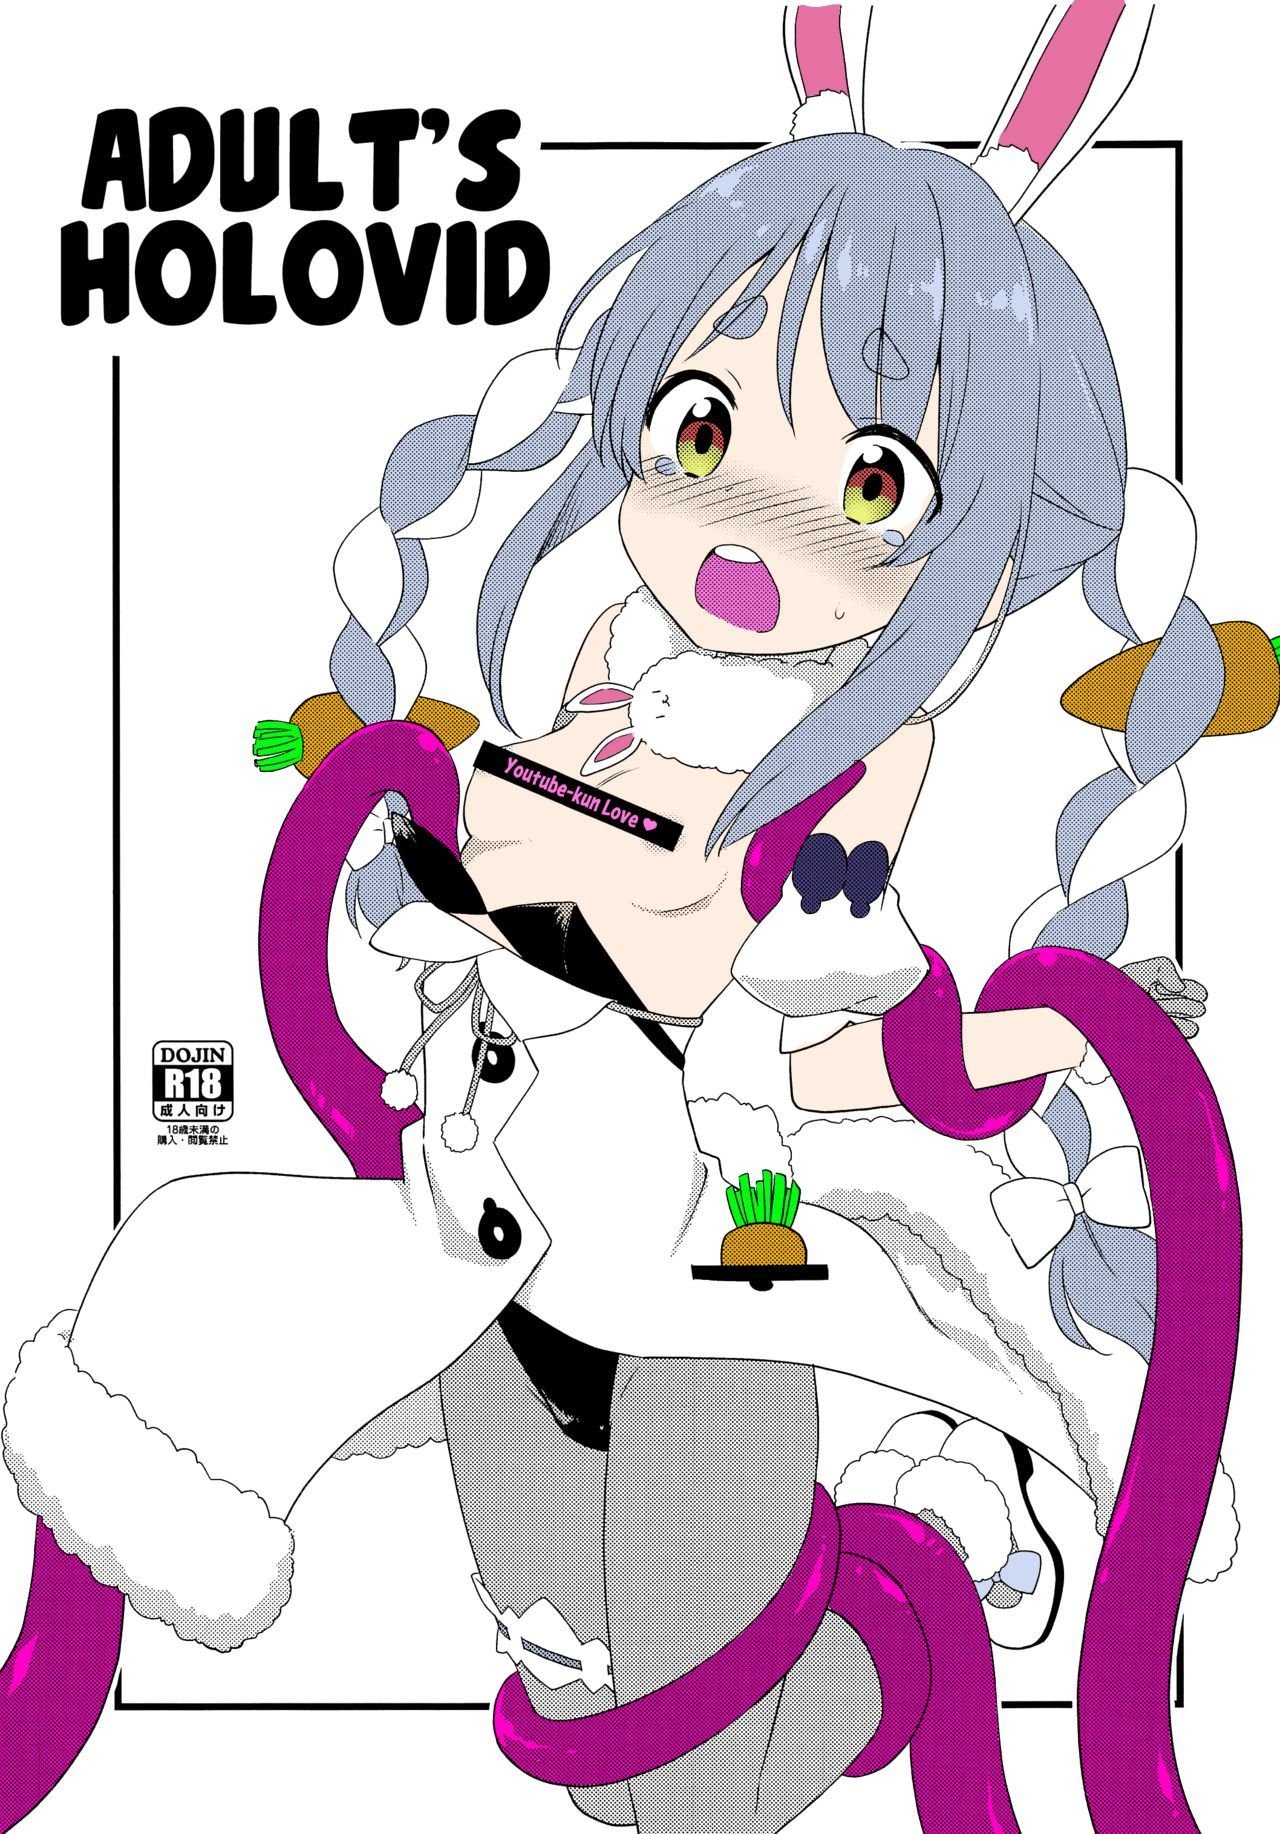 Adults Holovid - 0